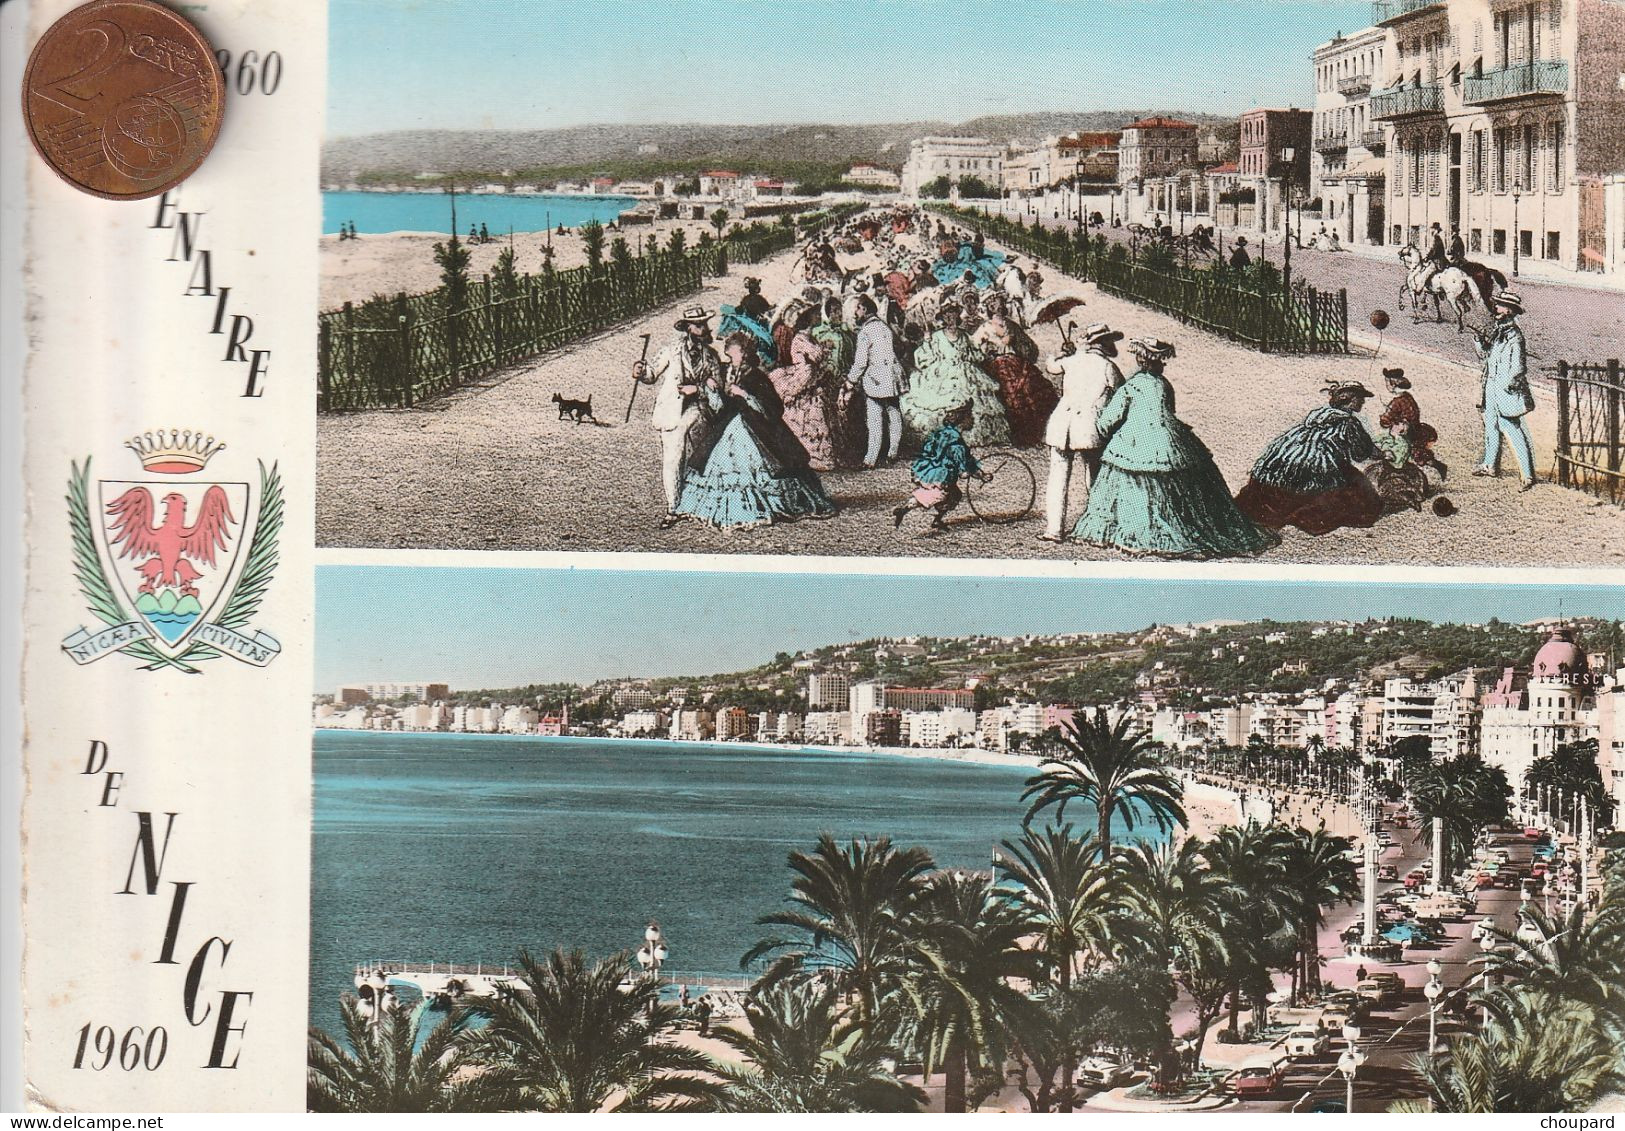 06 - Carte Postale Semi Moderne Du Centenaire De NICE - Life In The Old Town (Vieux Nice)